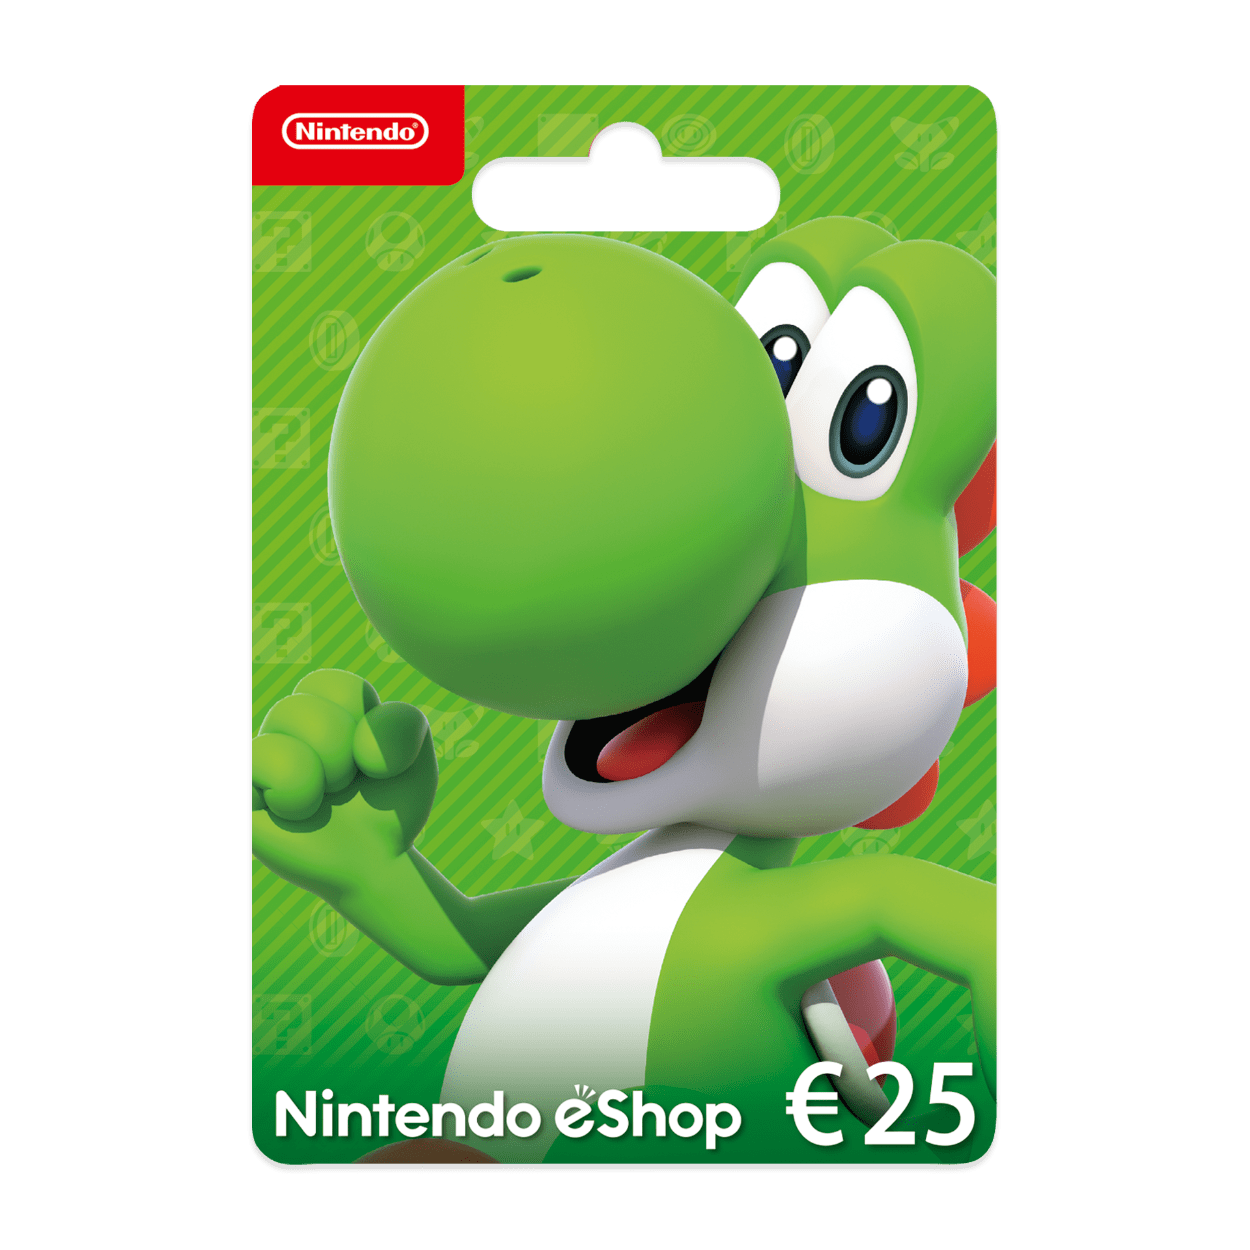 Carte Nintendo 15 euros bon marché chez ALDI